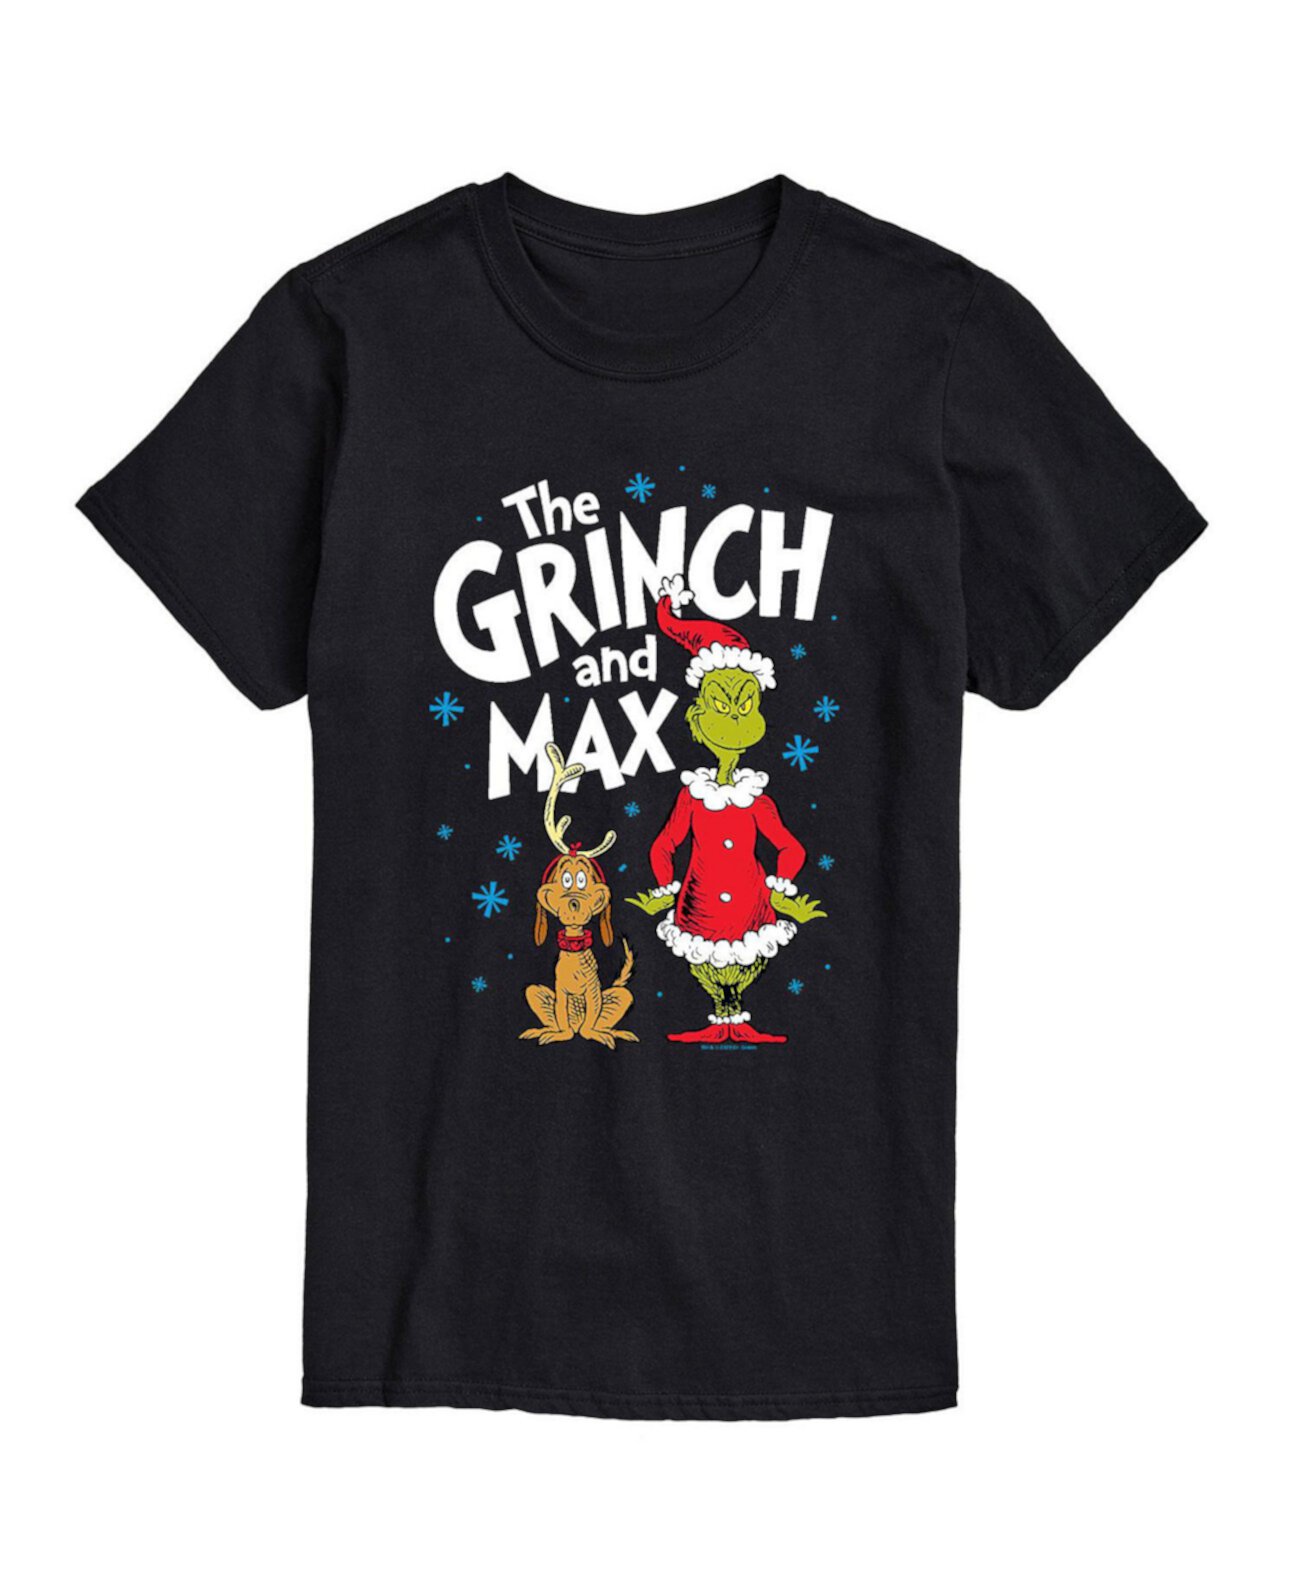 Мужская футболка с рисунком доктора Сьюза, Гринча и Макса AIRWAVES